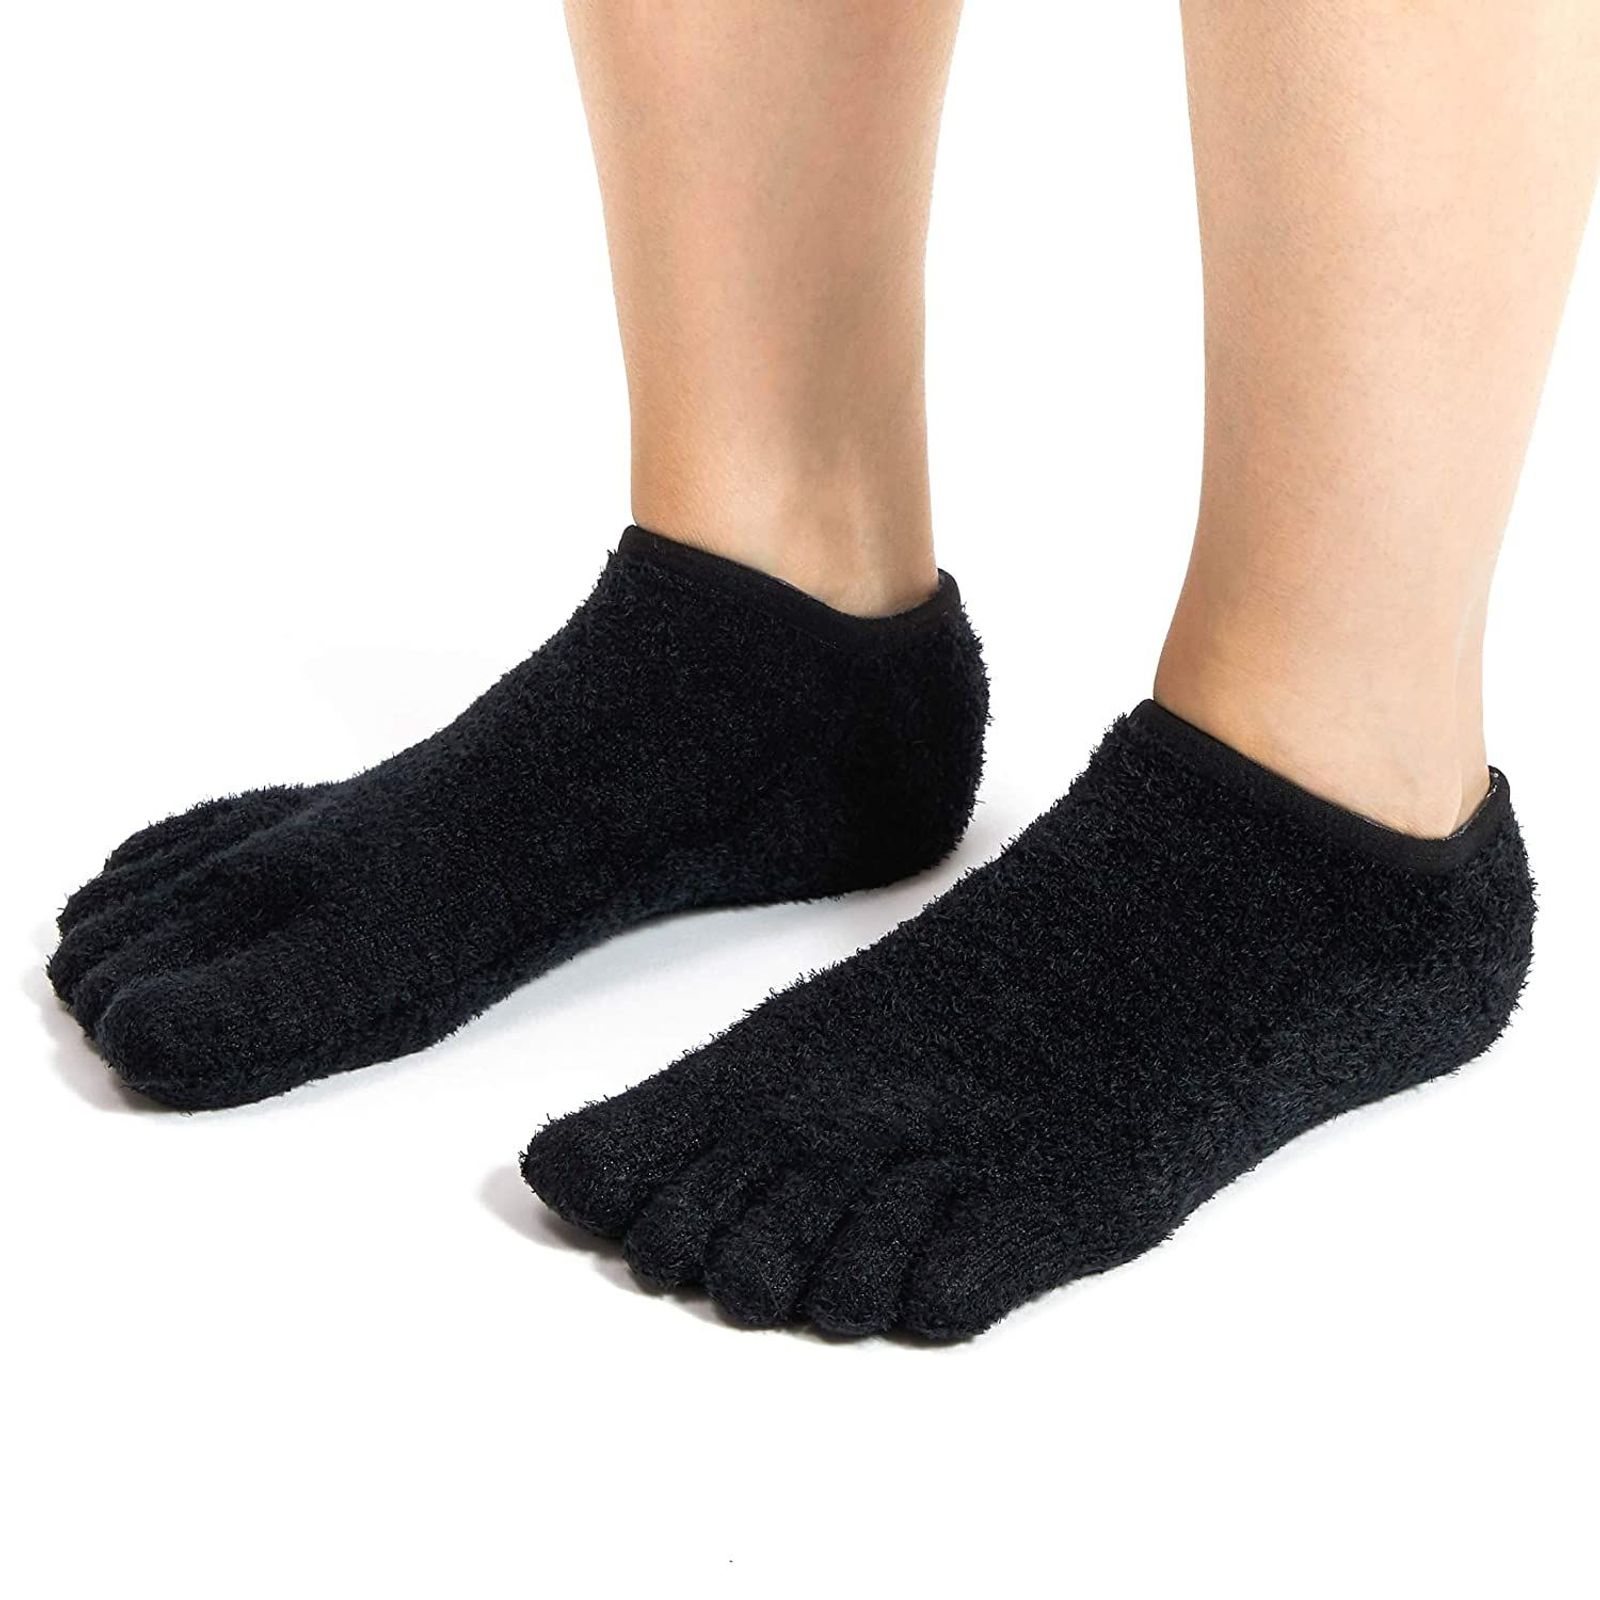 Black 5-Toe Gel Socks (US 7-10, 2 Pairs) - image 1 of 7